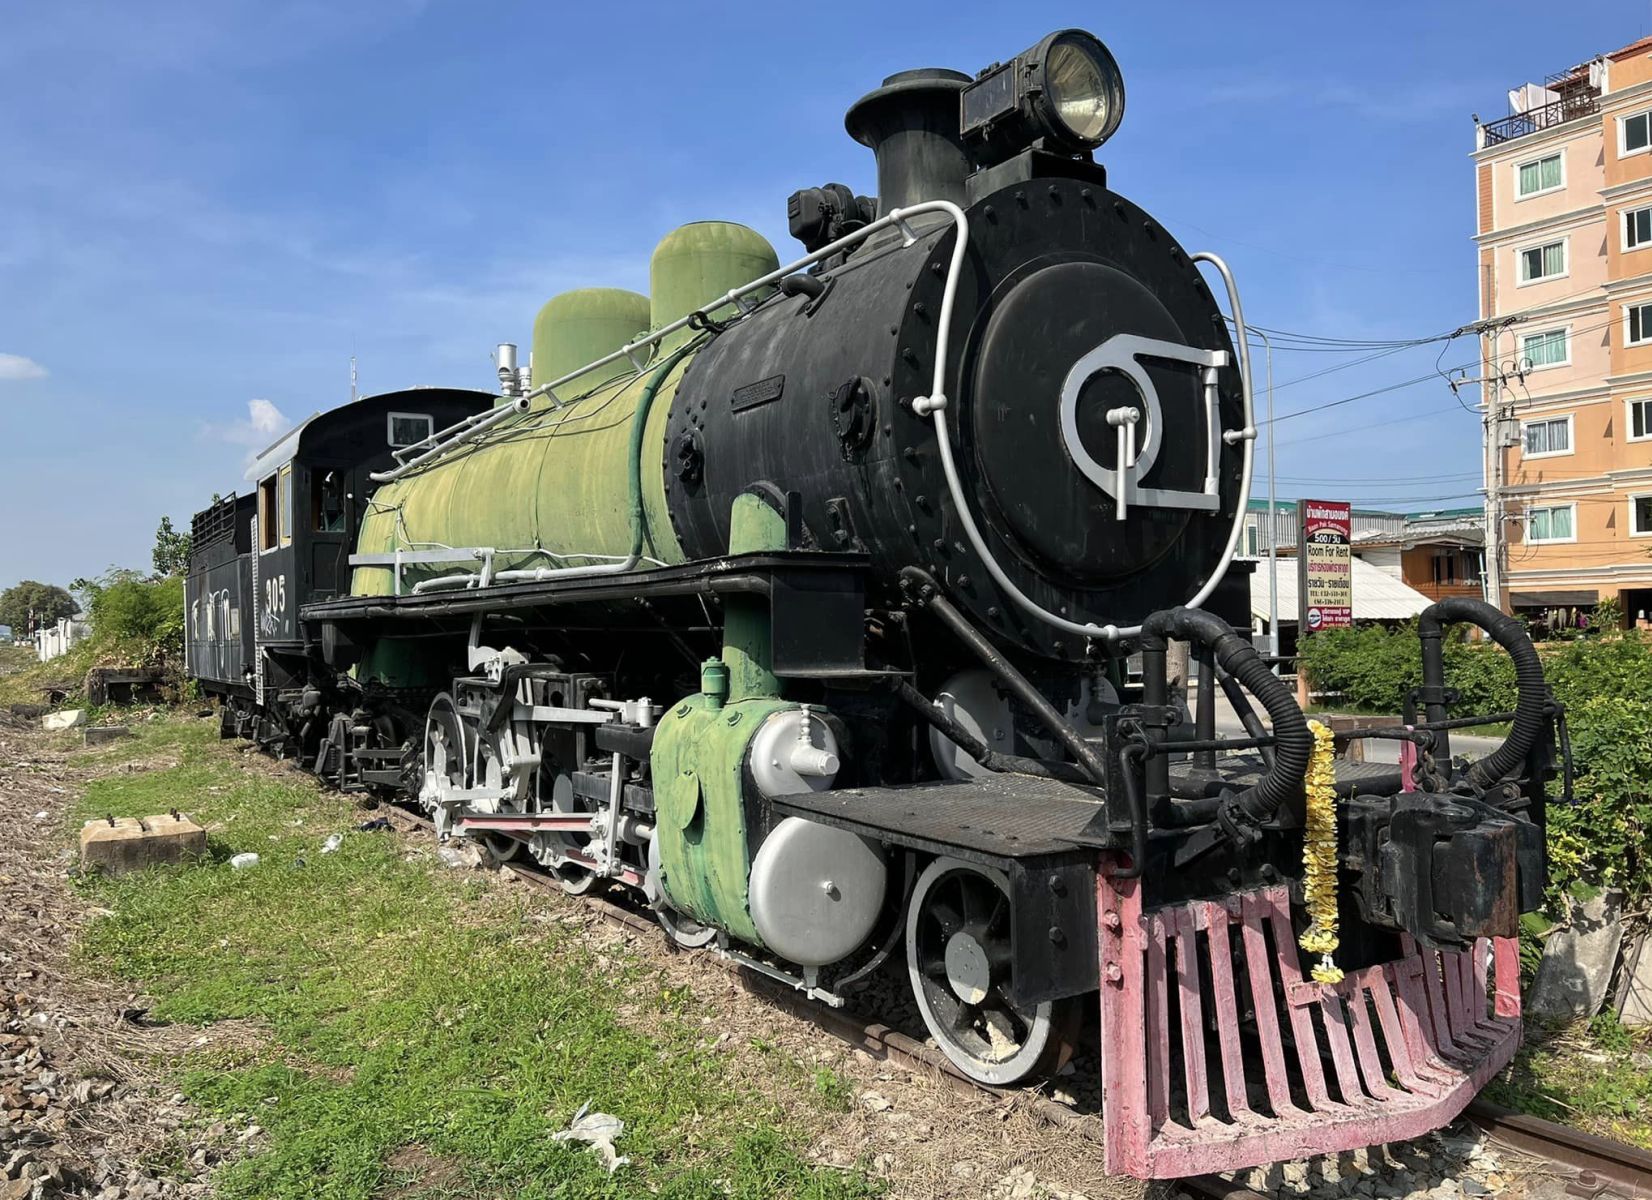 Old steam locomotive at Hua Hin